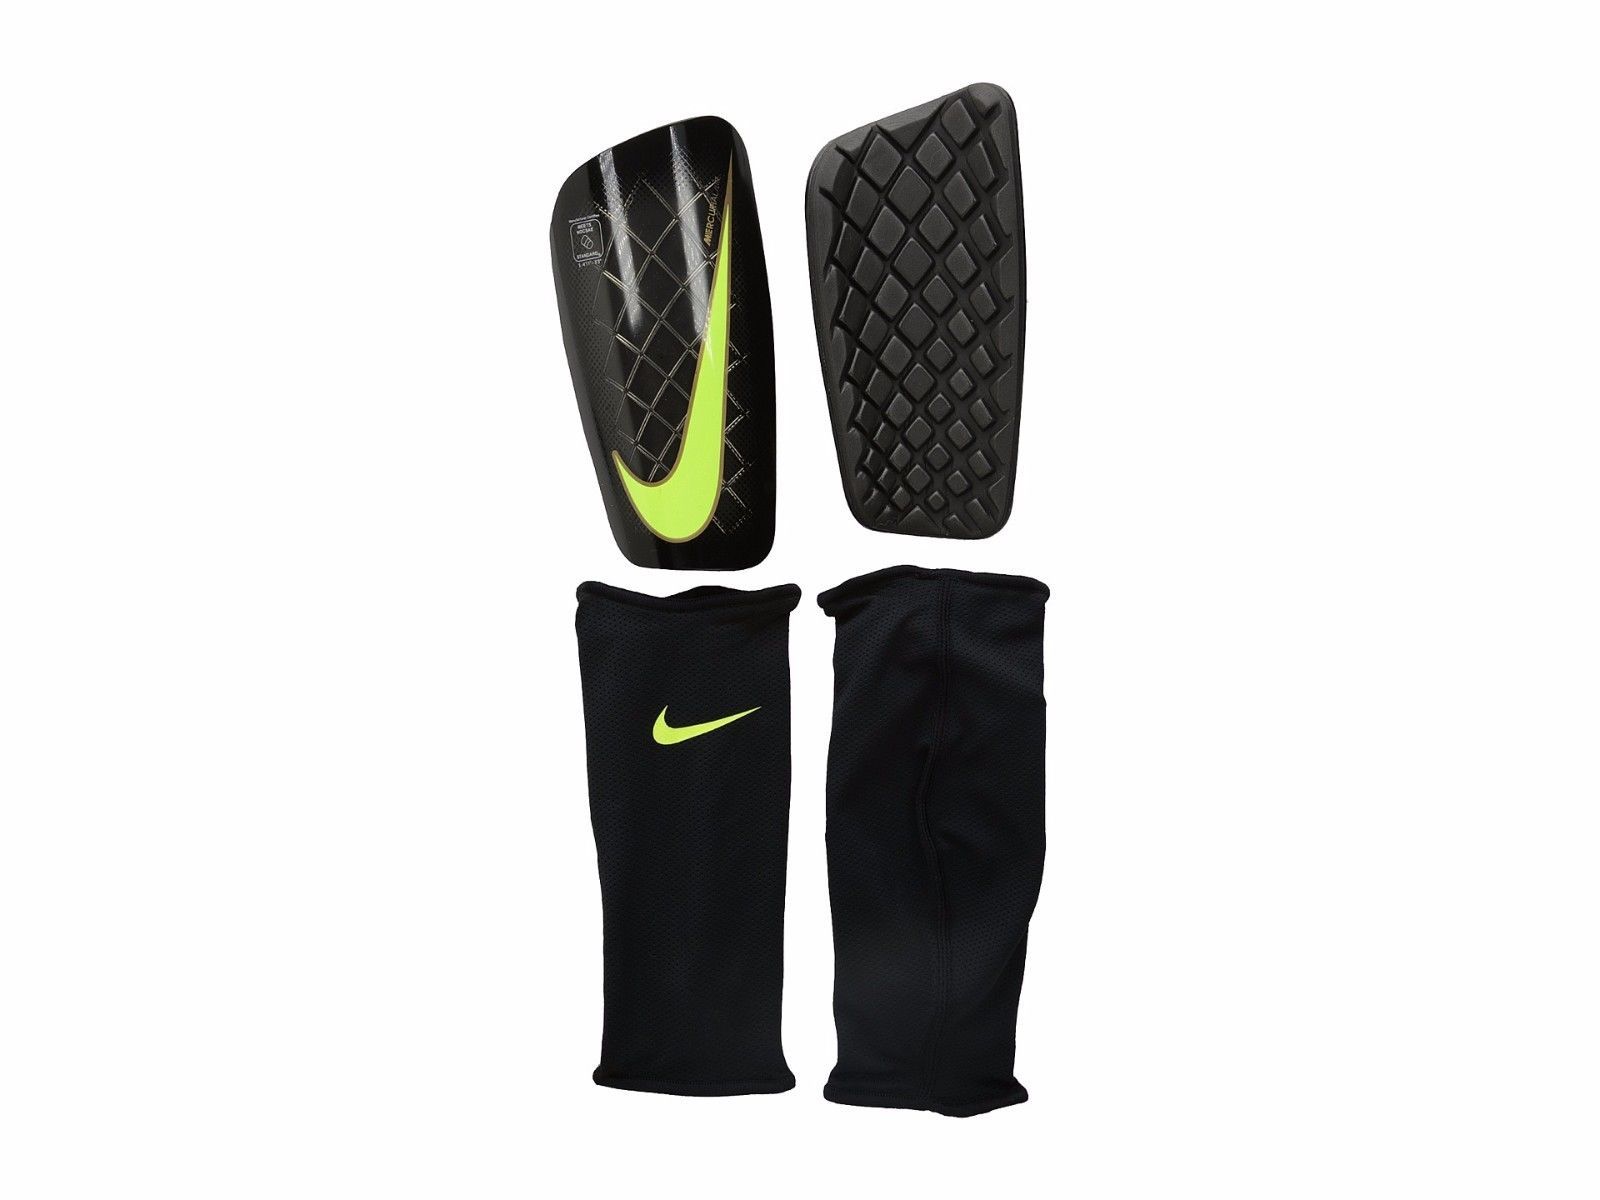 Huh Kamer Crack pot Nike Mercurial Lite Soccer Shin Guards Adult and 21 similar items